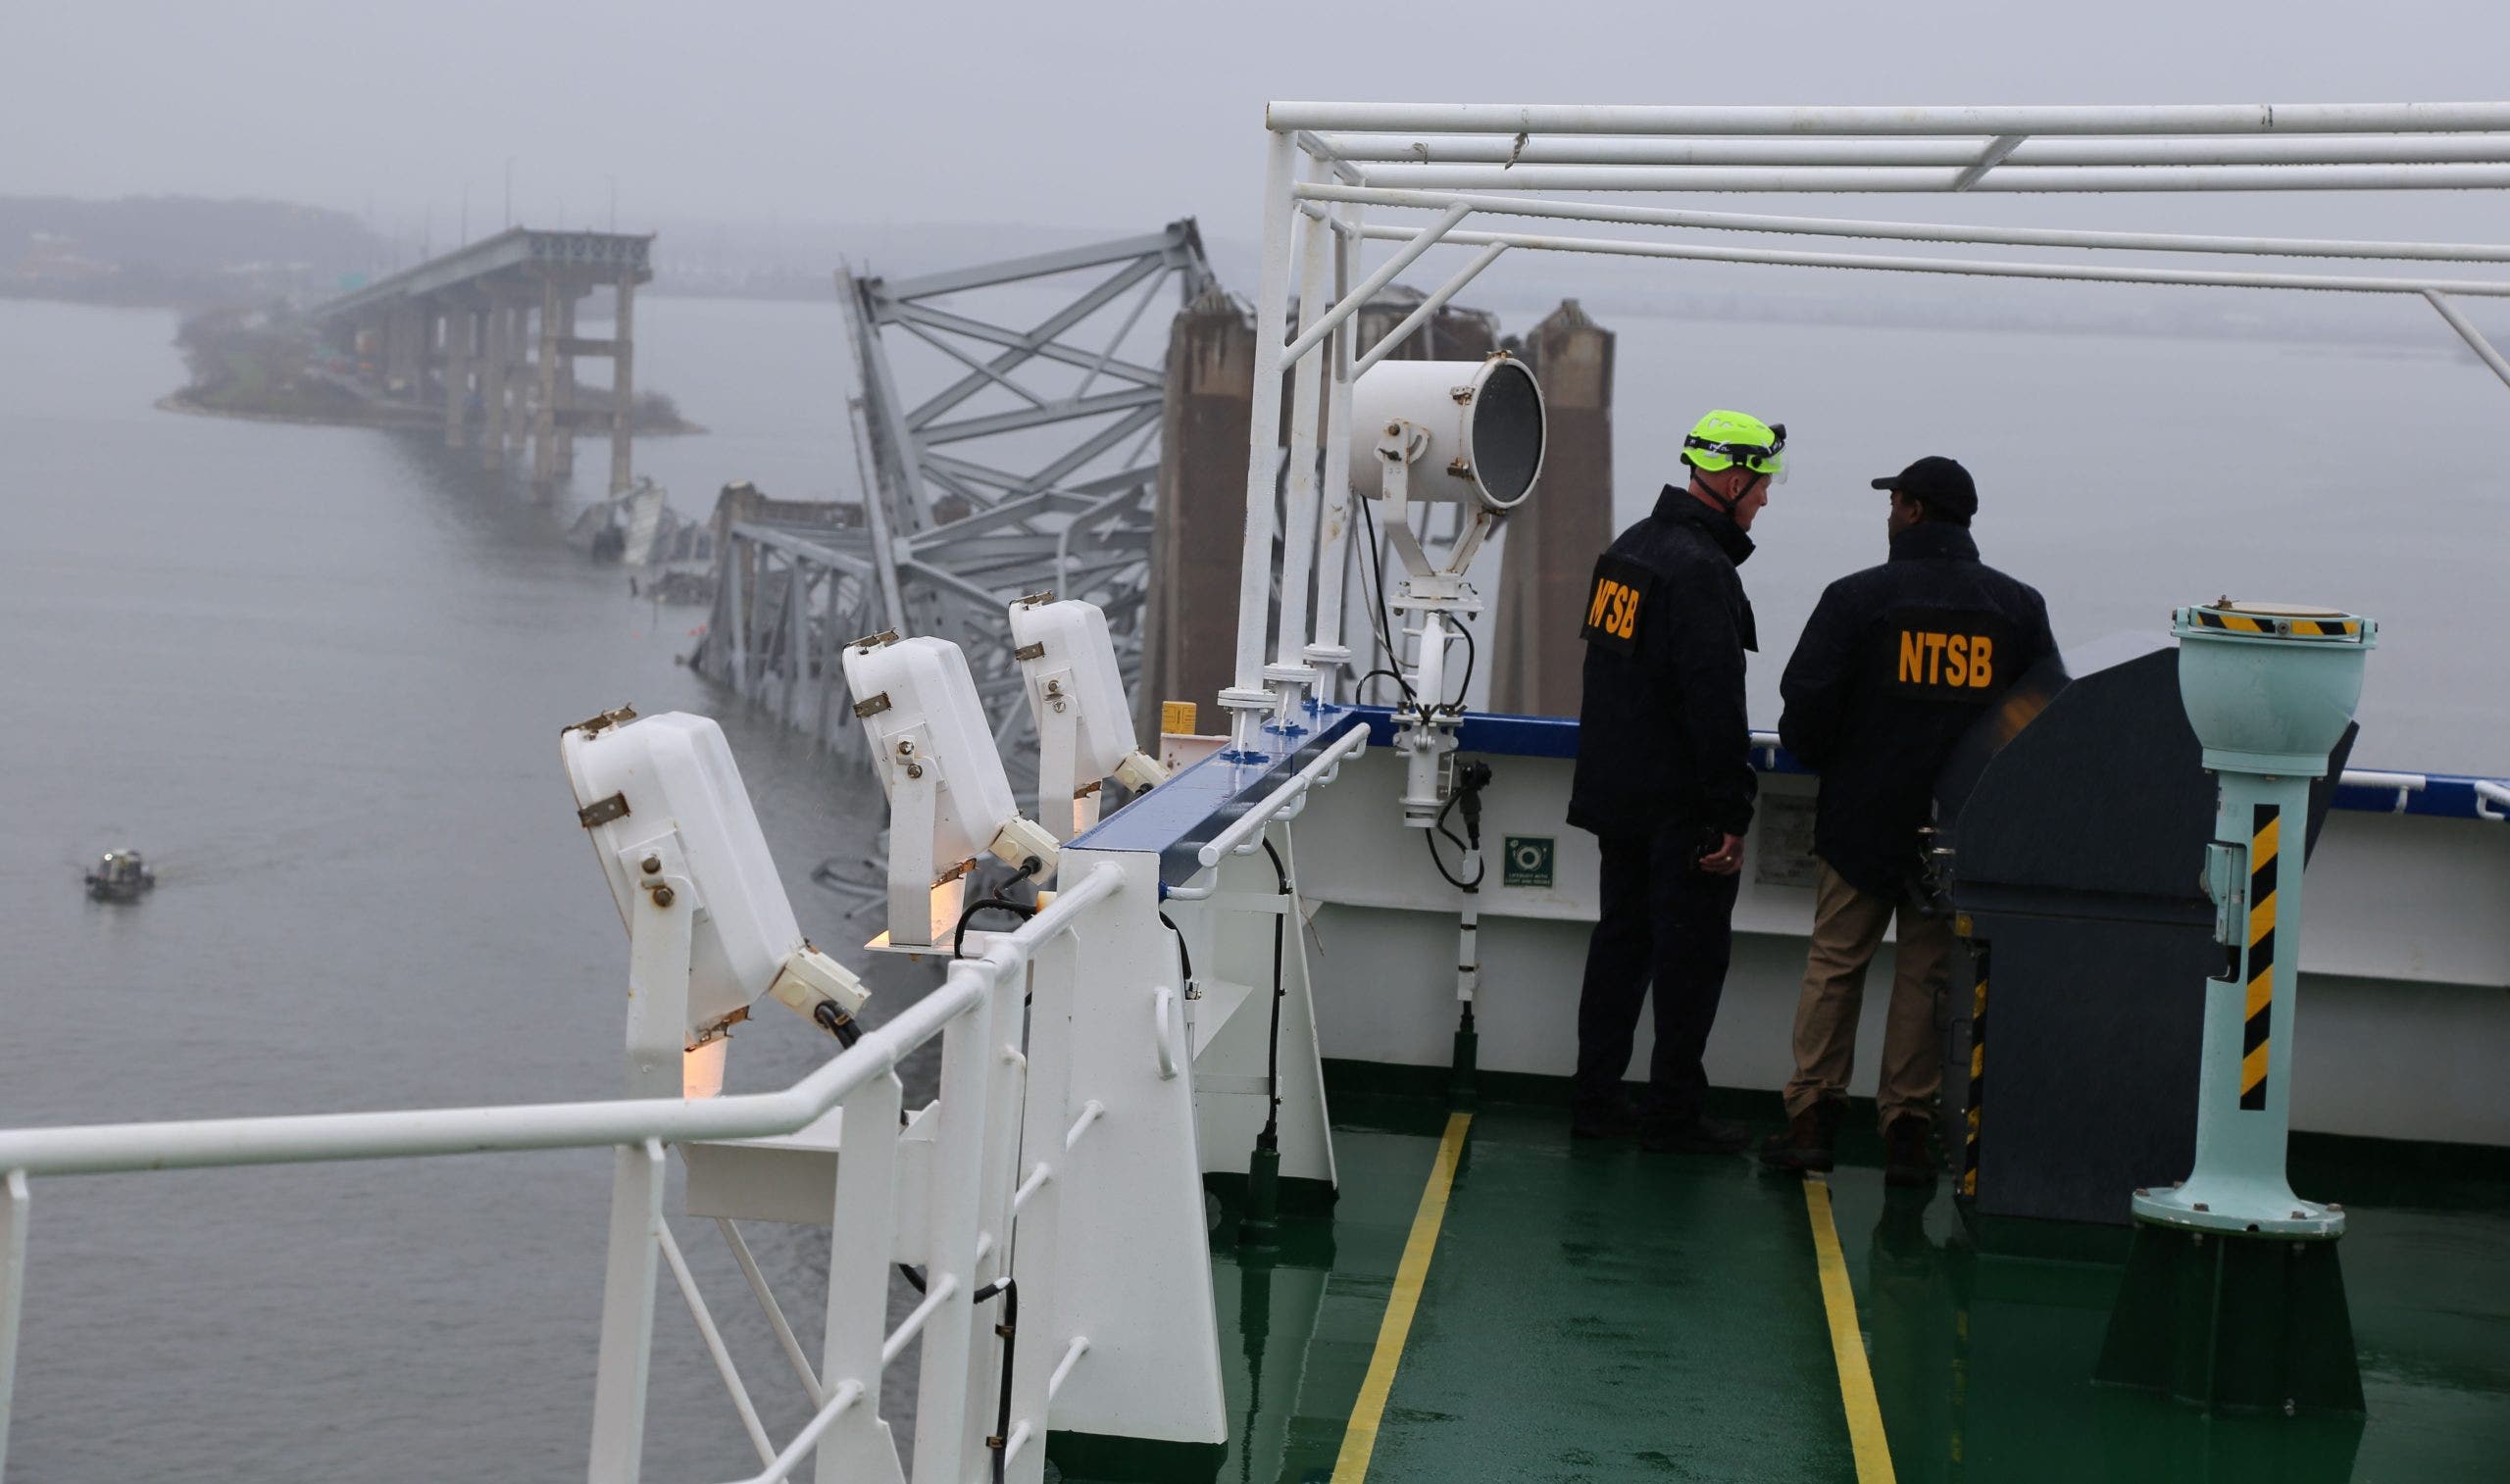 Baltimore bridge collapse: ntsb releases images, video of investigators onboard stricken cargo ship